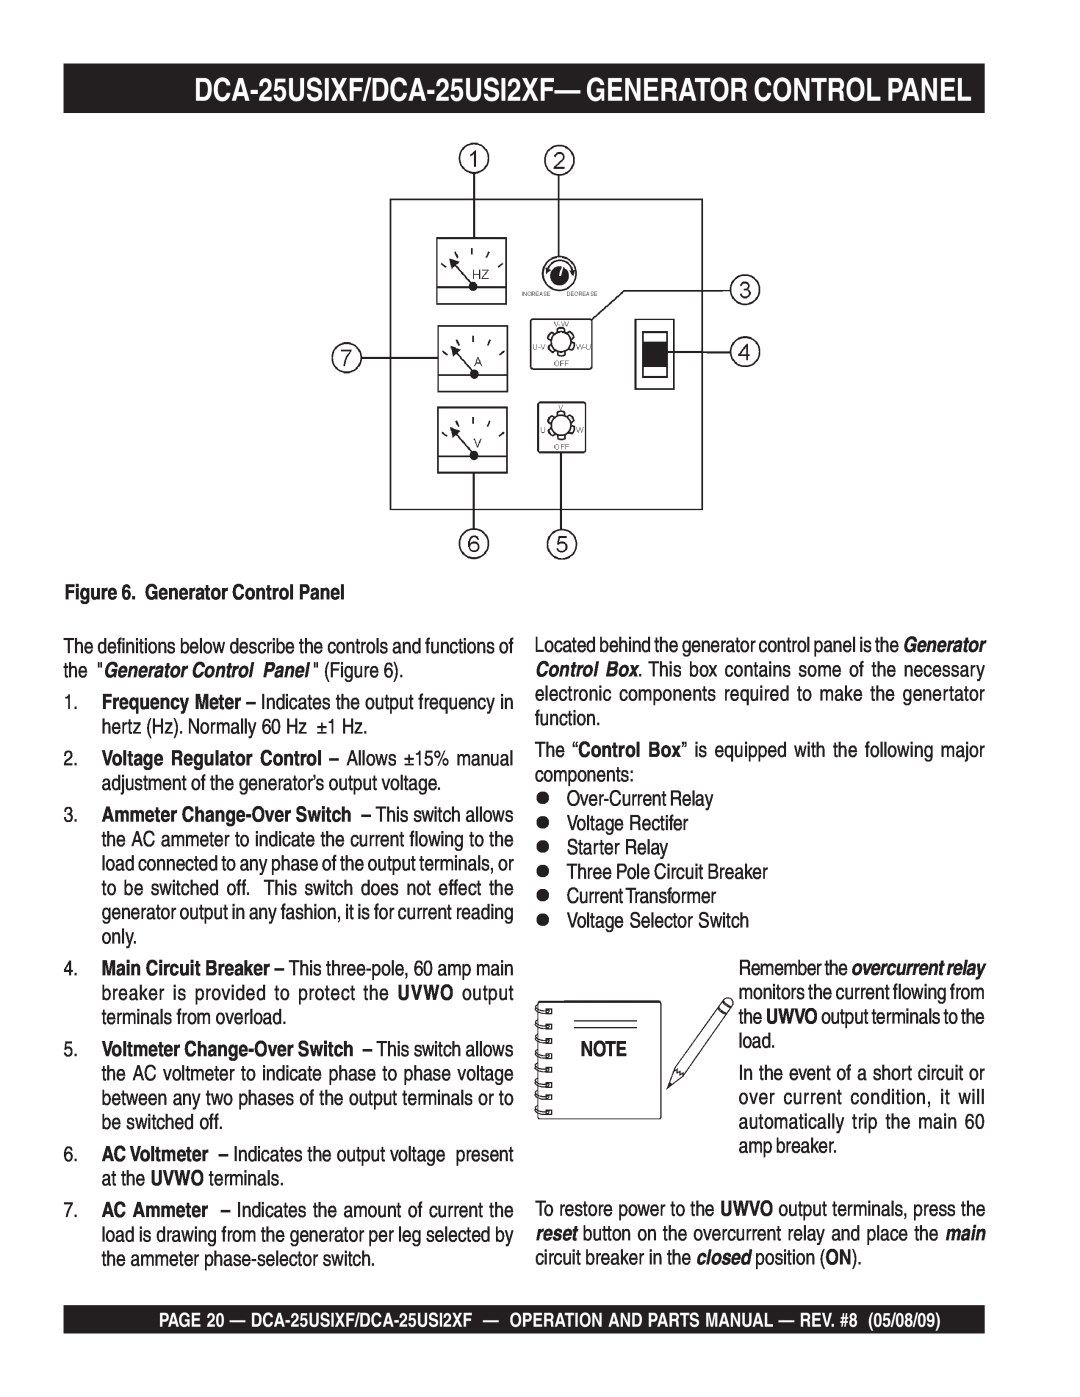 Multiquip operation manual DCA-25USIXF/DCA-25USI2XF- GENERATOR CONTROL PANEL, Generator Control Panel, NOTE load 